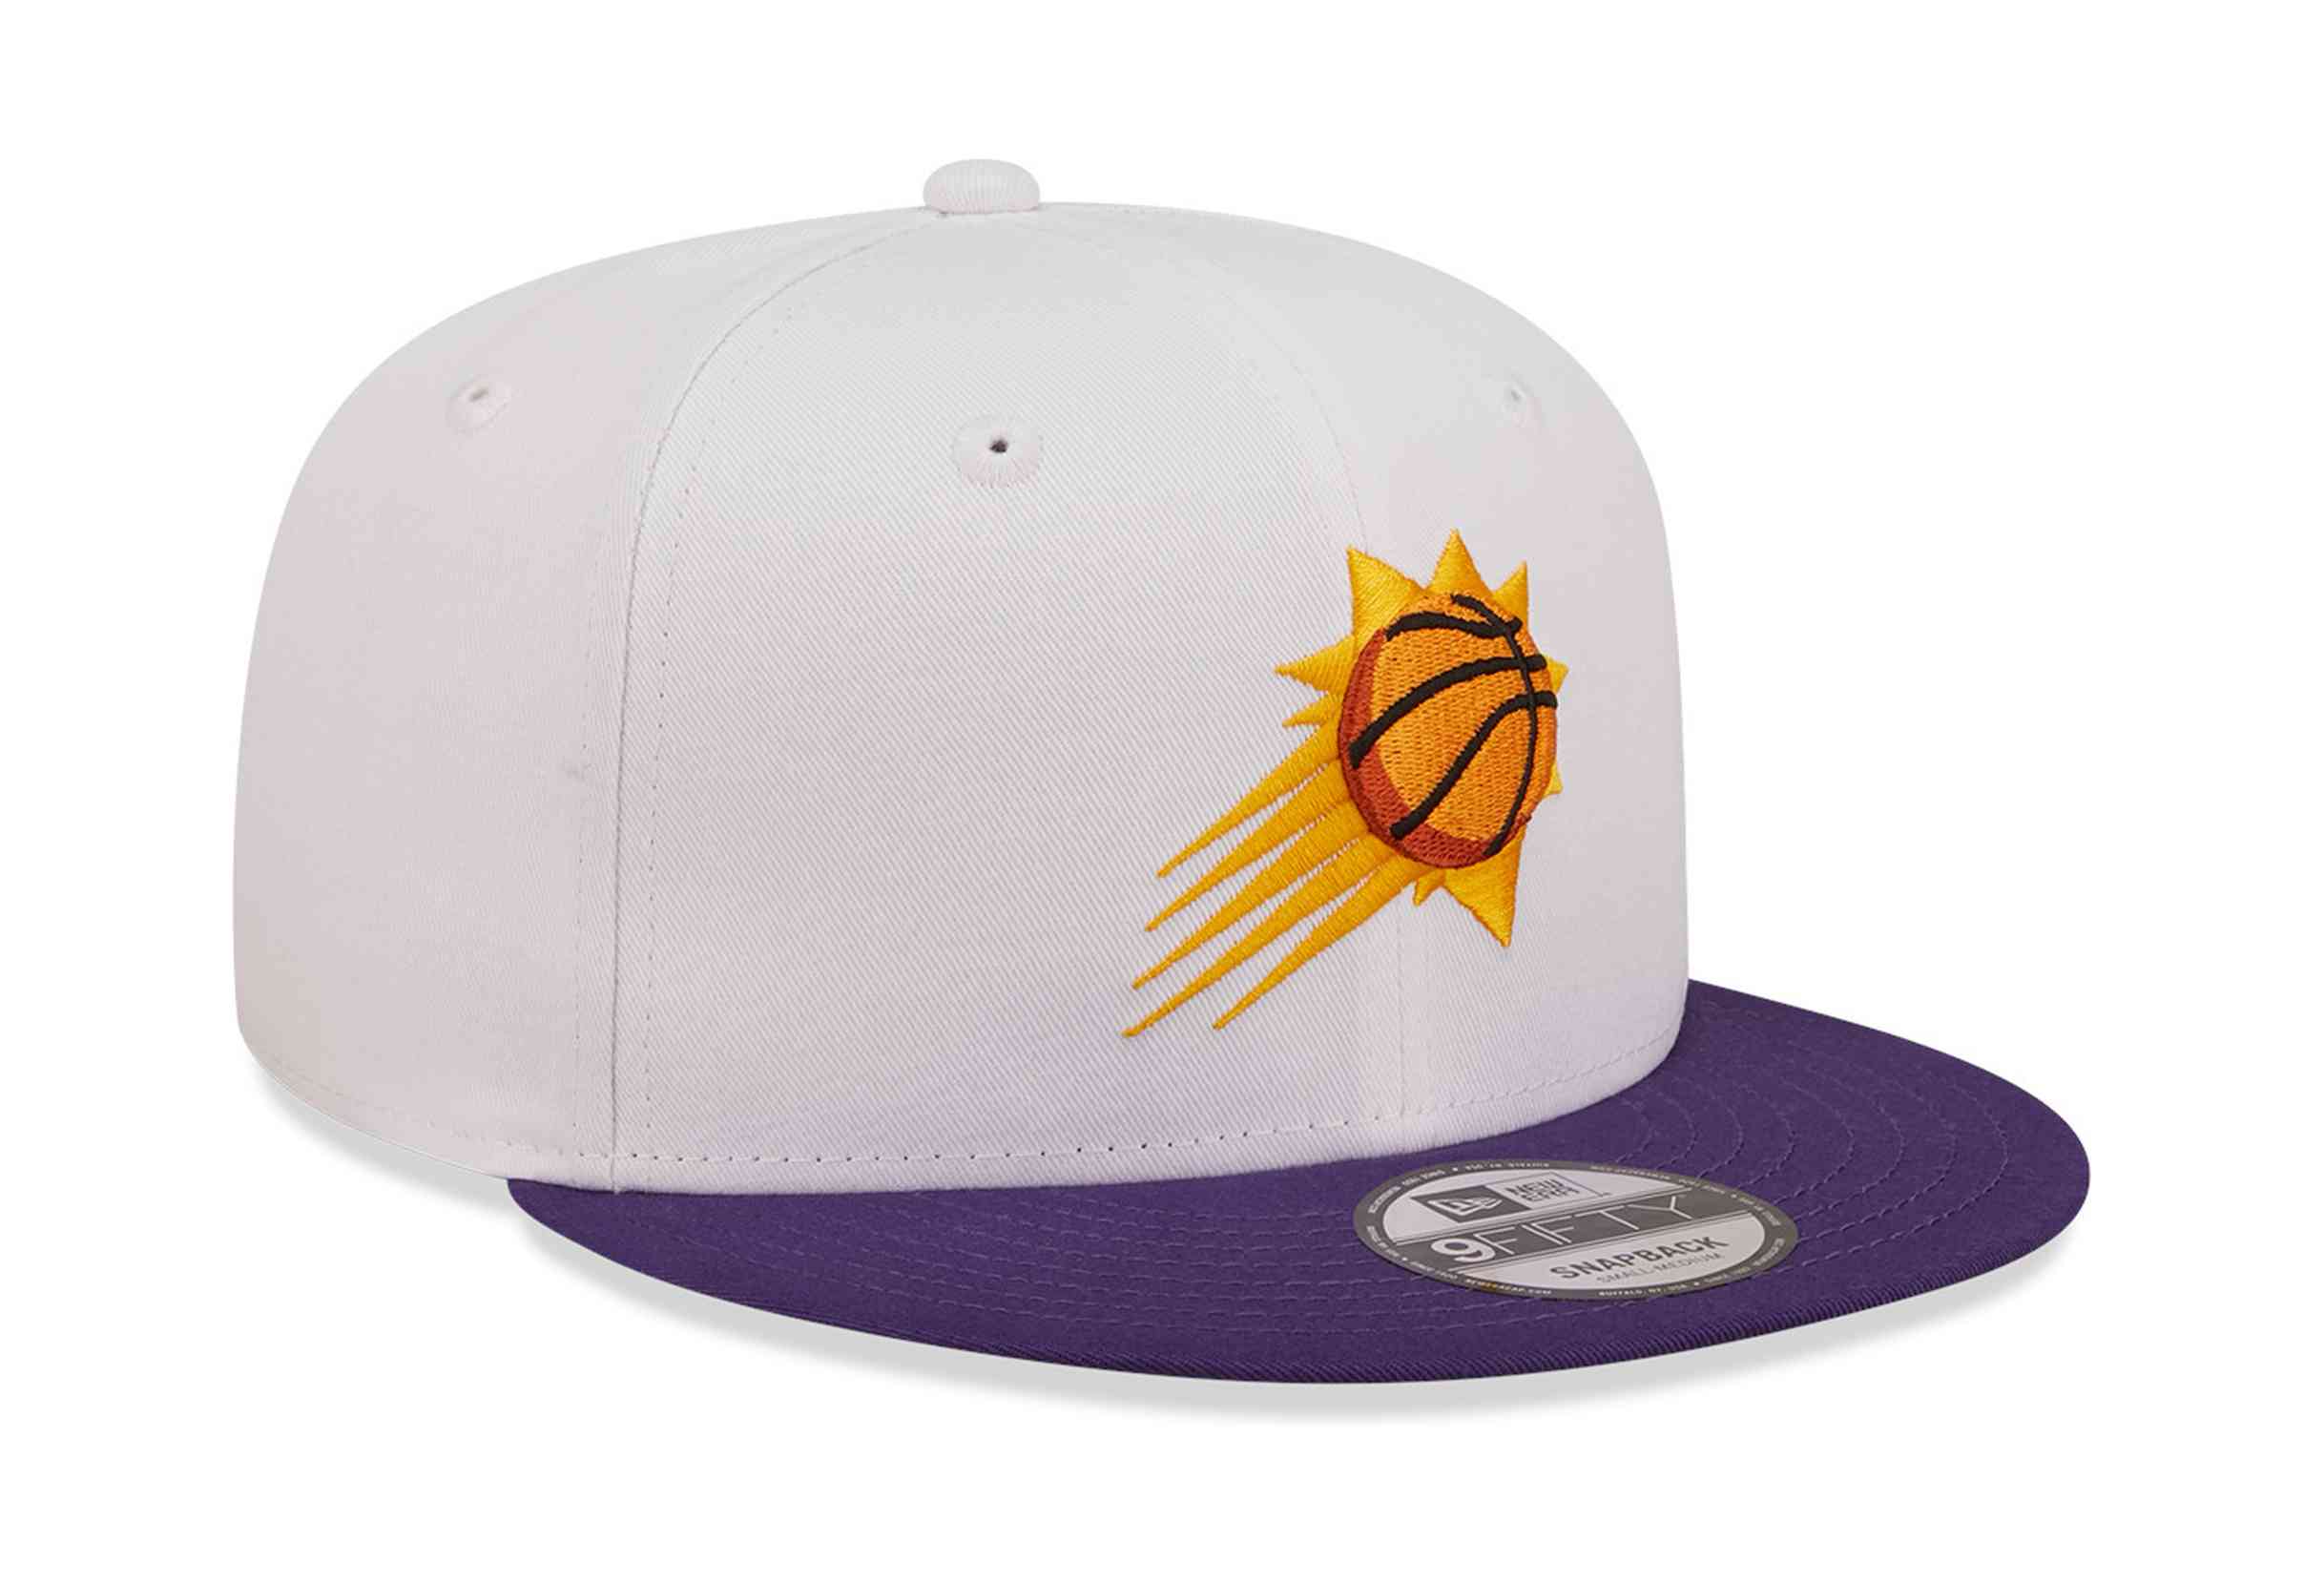 New Era - NBA Phoenix Suns White Crown Team 9Fifty Snapback Cap